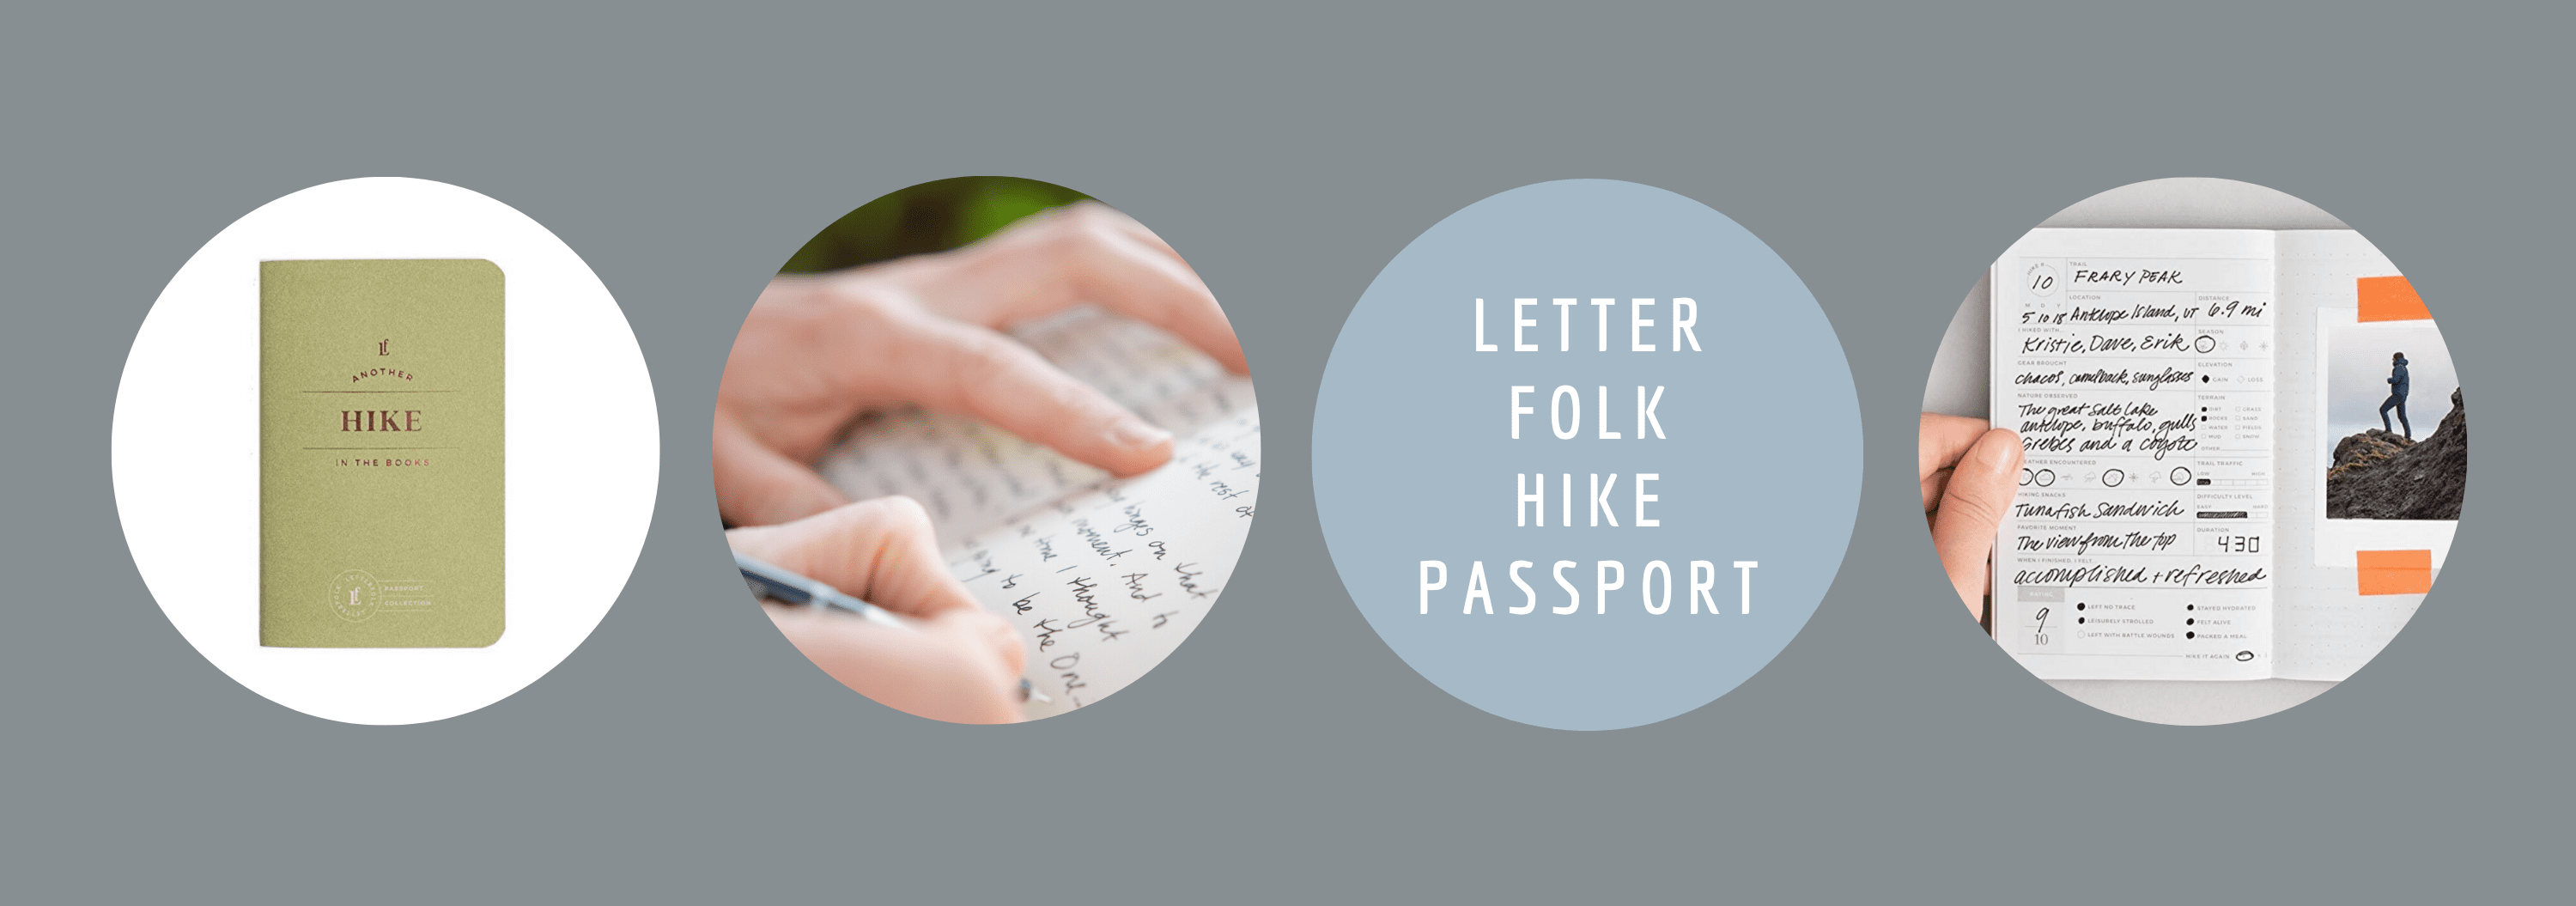 letterfolk travel passport.png